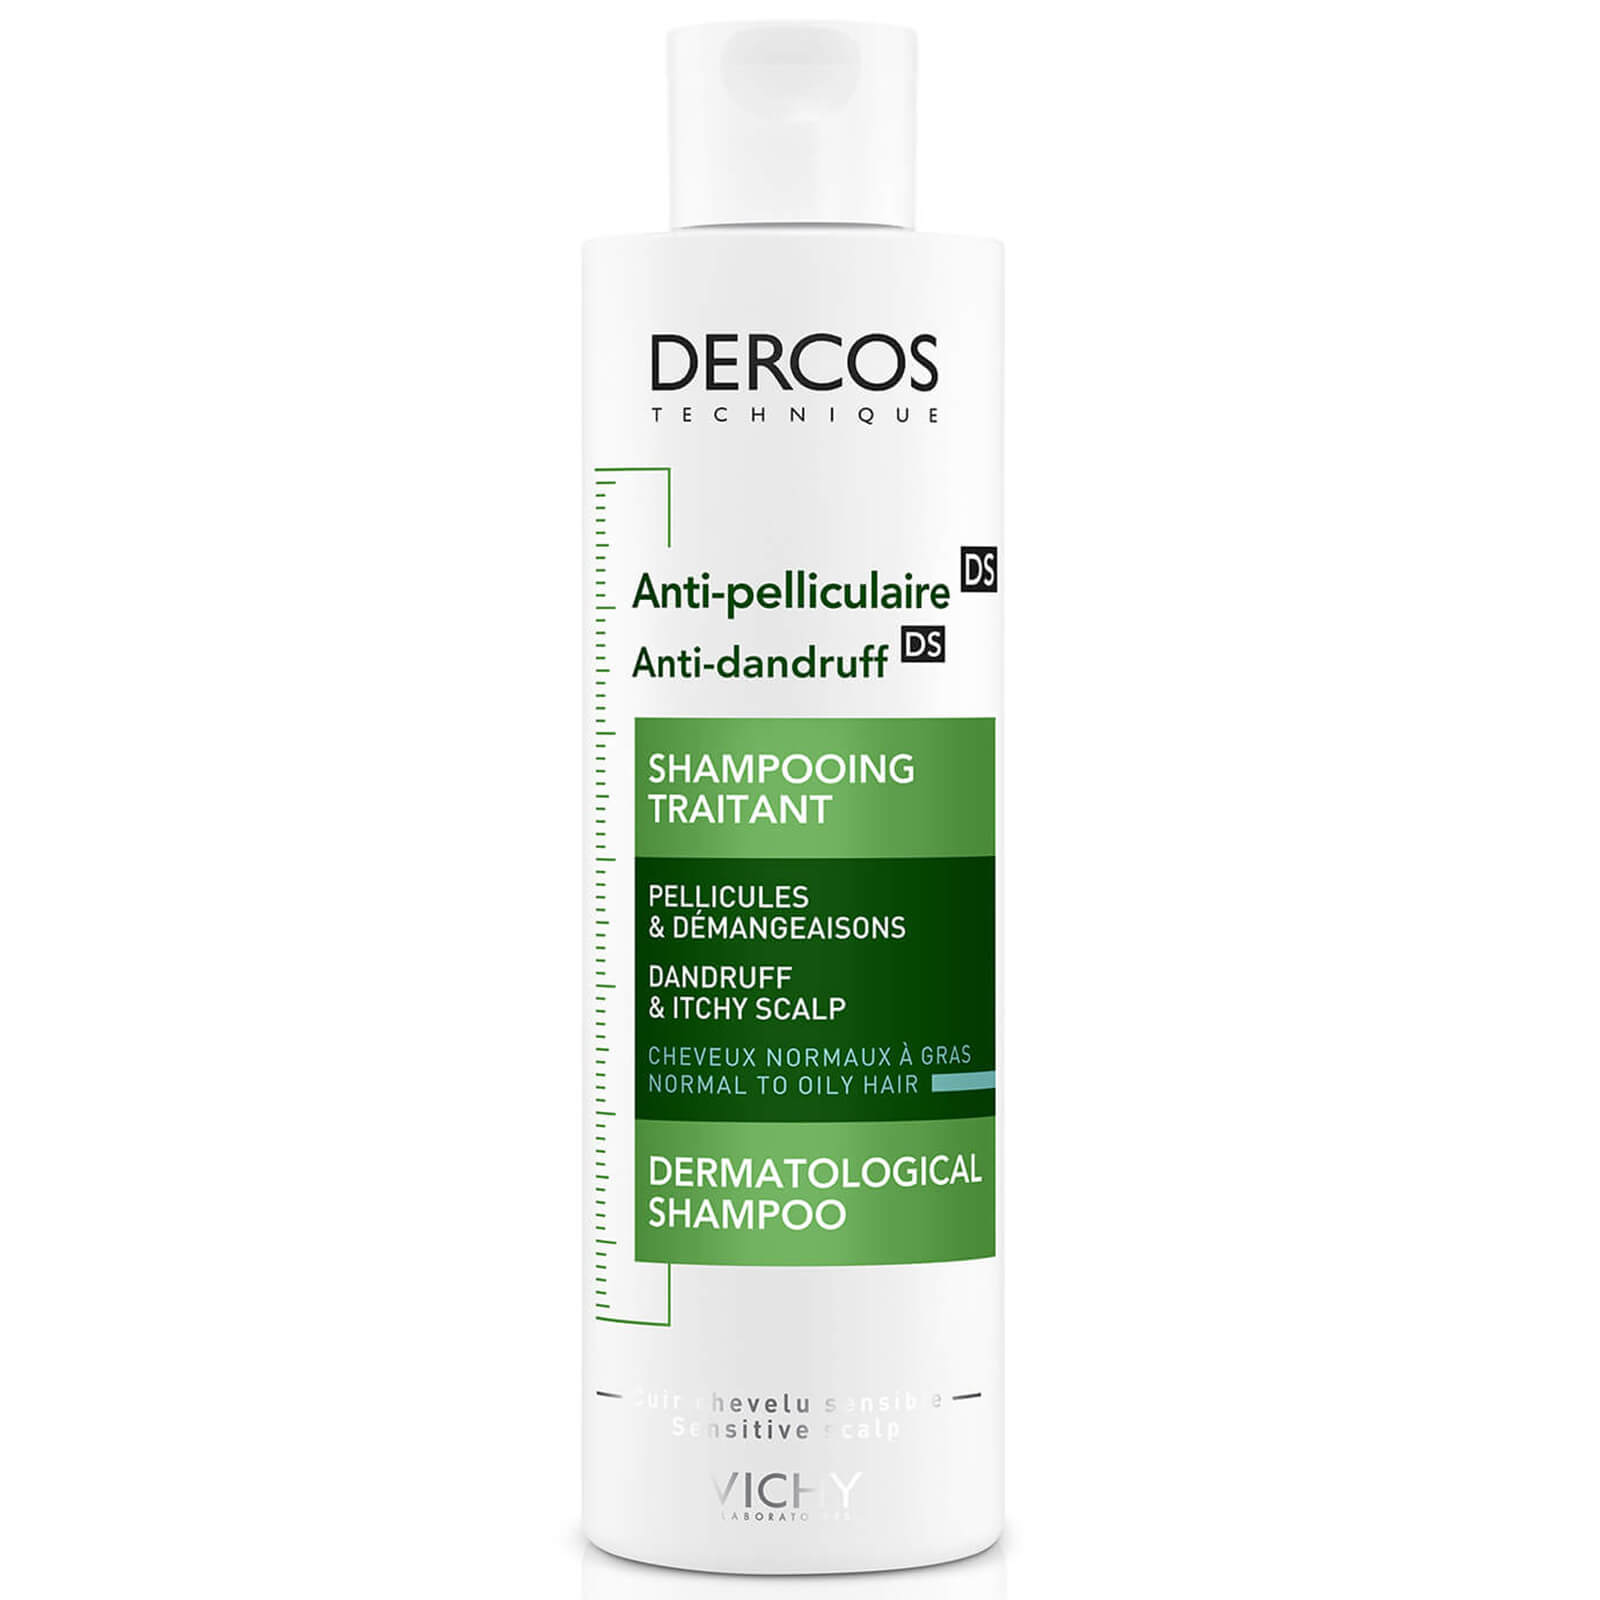 X3 Vichy Dercos Anti-schuppen Advanced Action Shampoo 200ml - Normal Bis Fettiges Haar